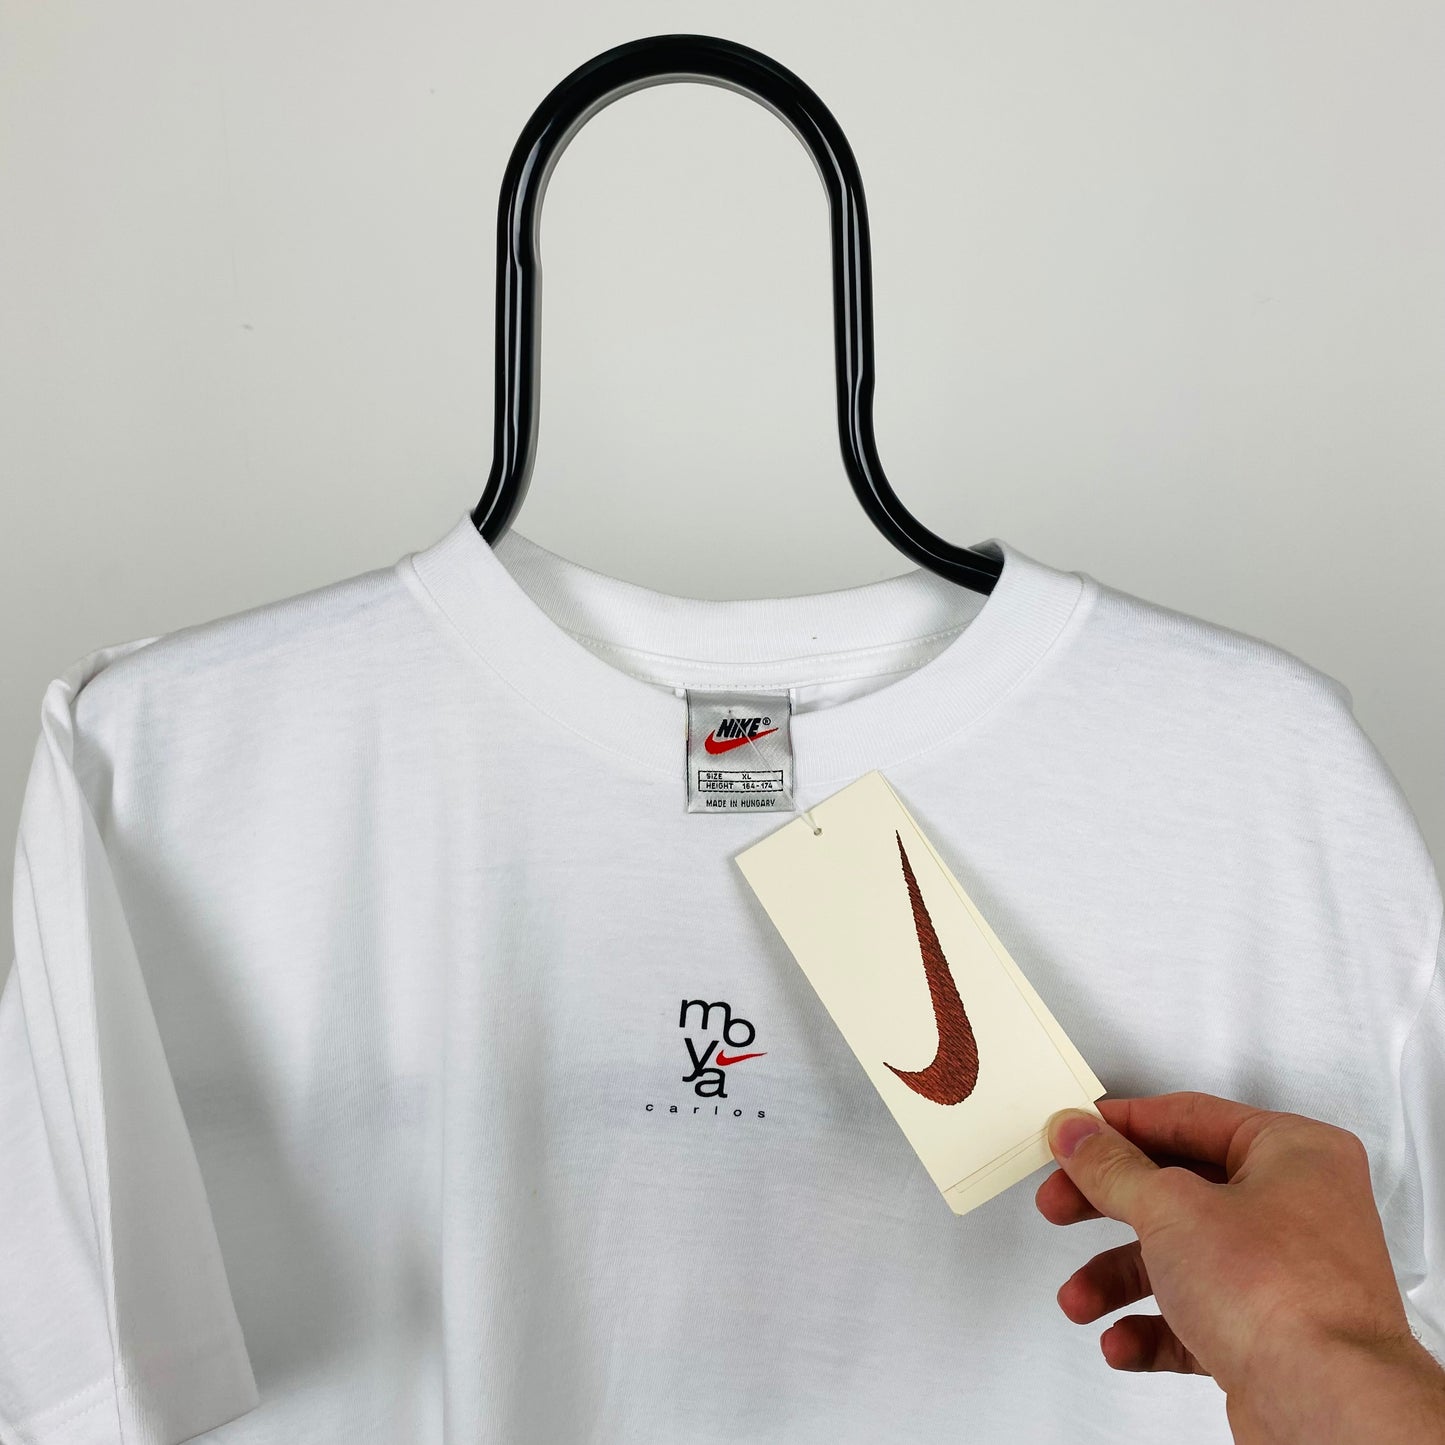 Vintage Nike Challenge Court Tennis T-Shirt White Small